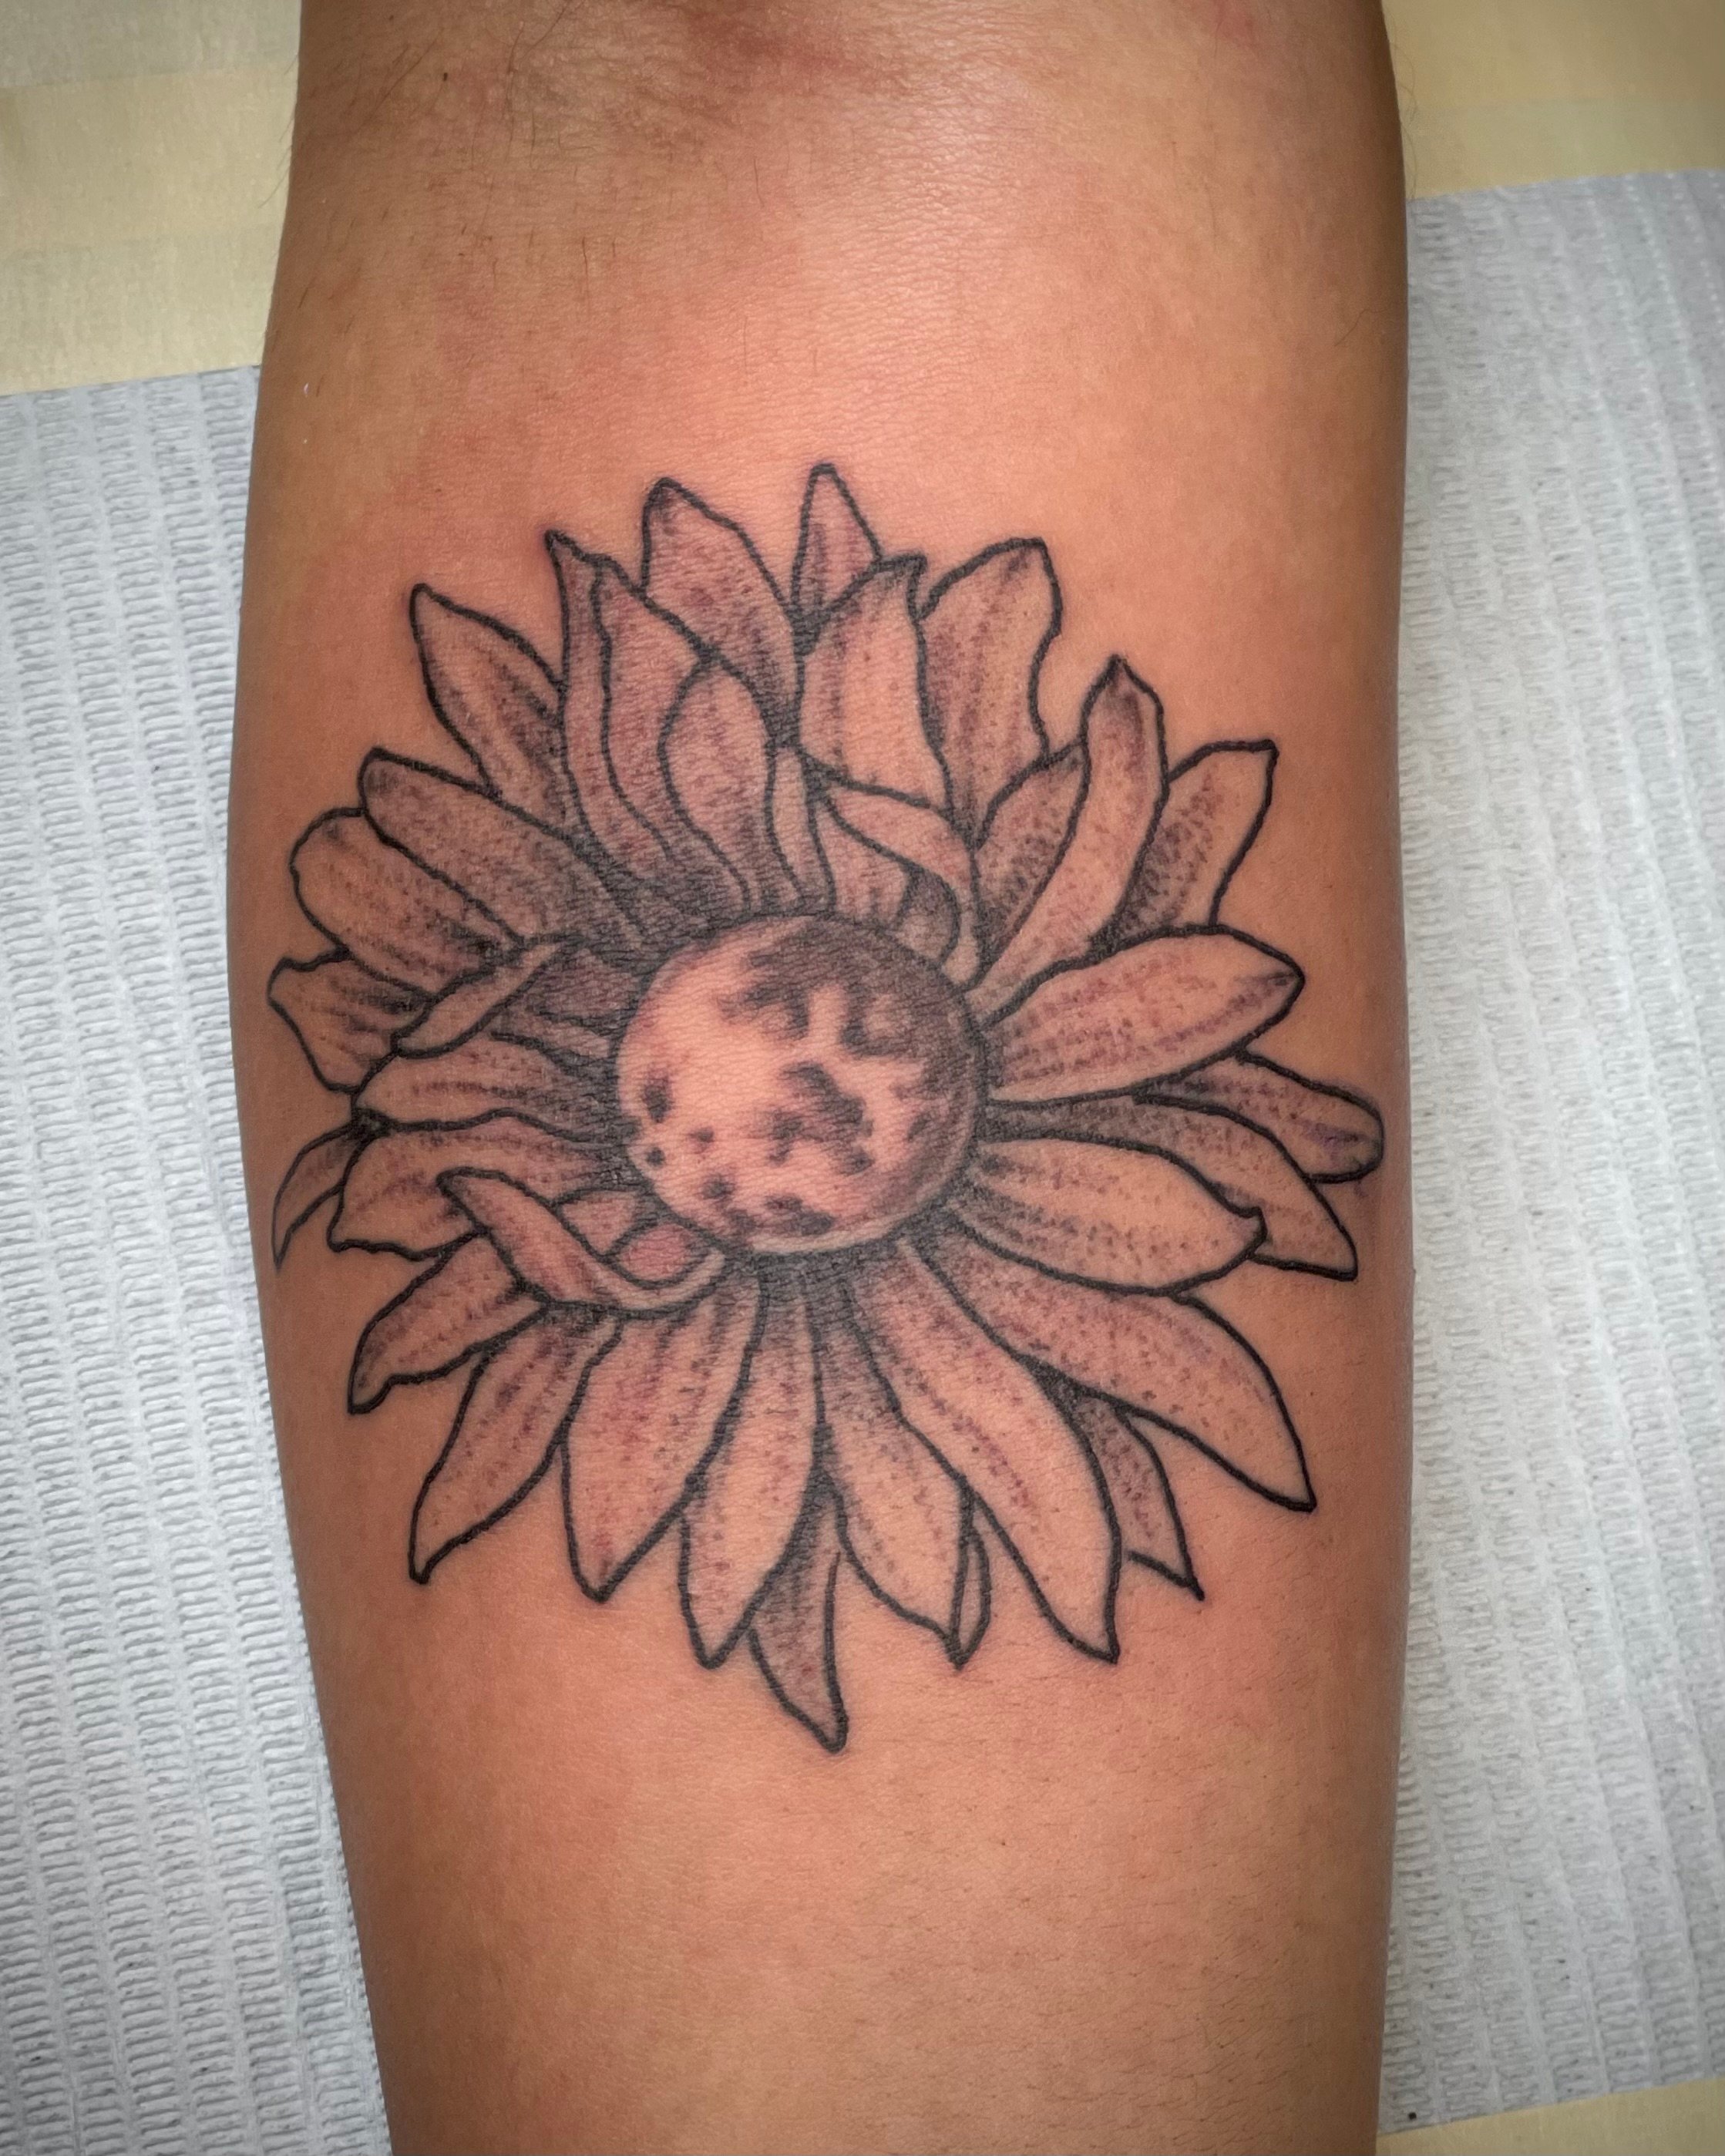 Tattoos for Women - Sunflower